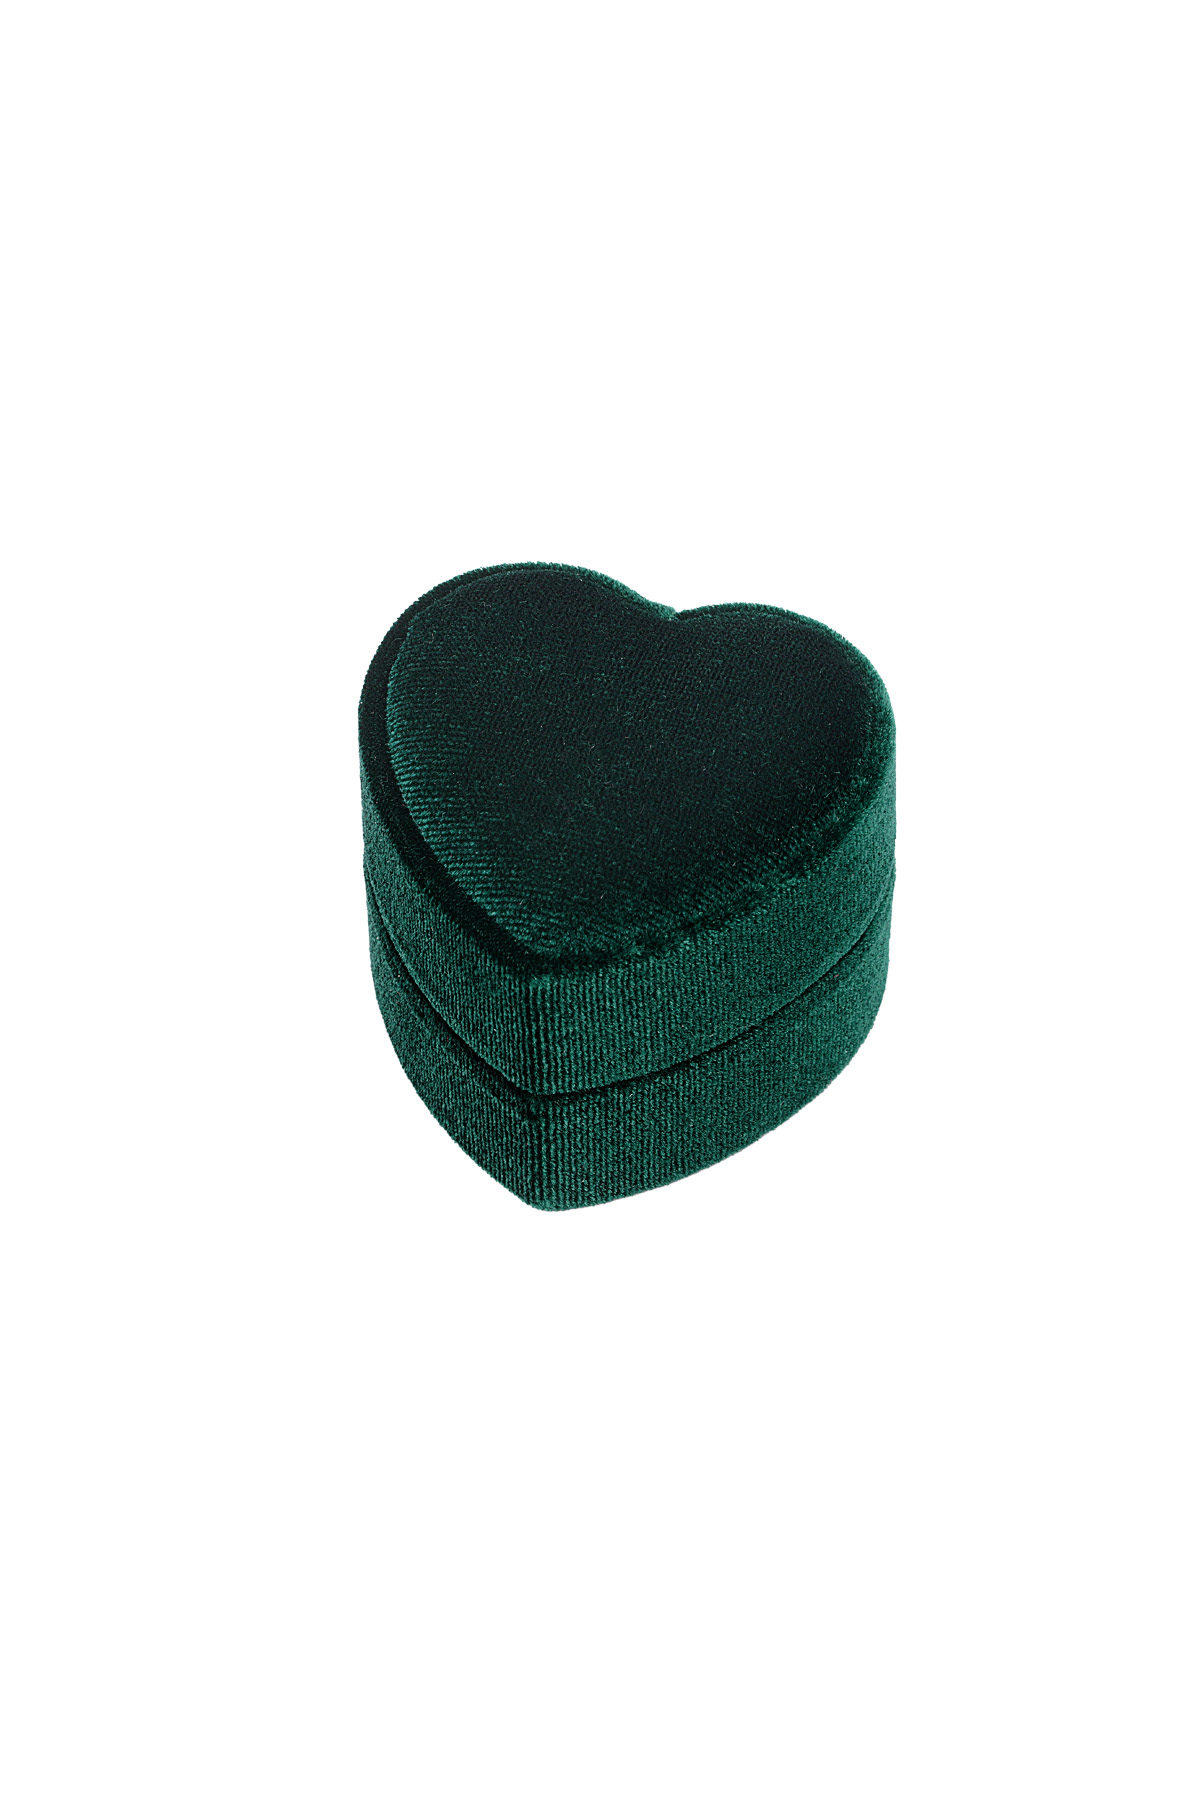 Jewelry box heart velvet - green